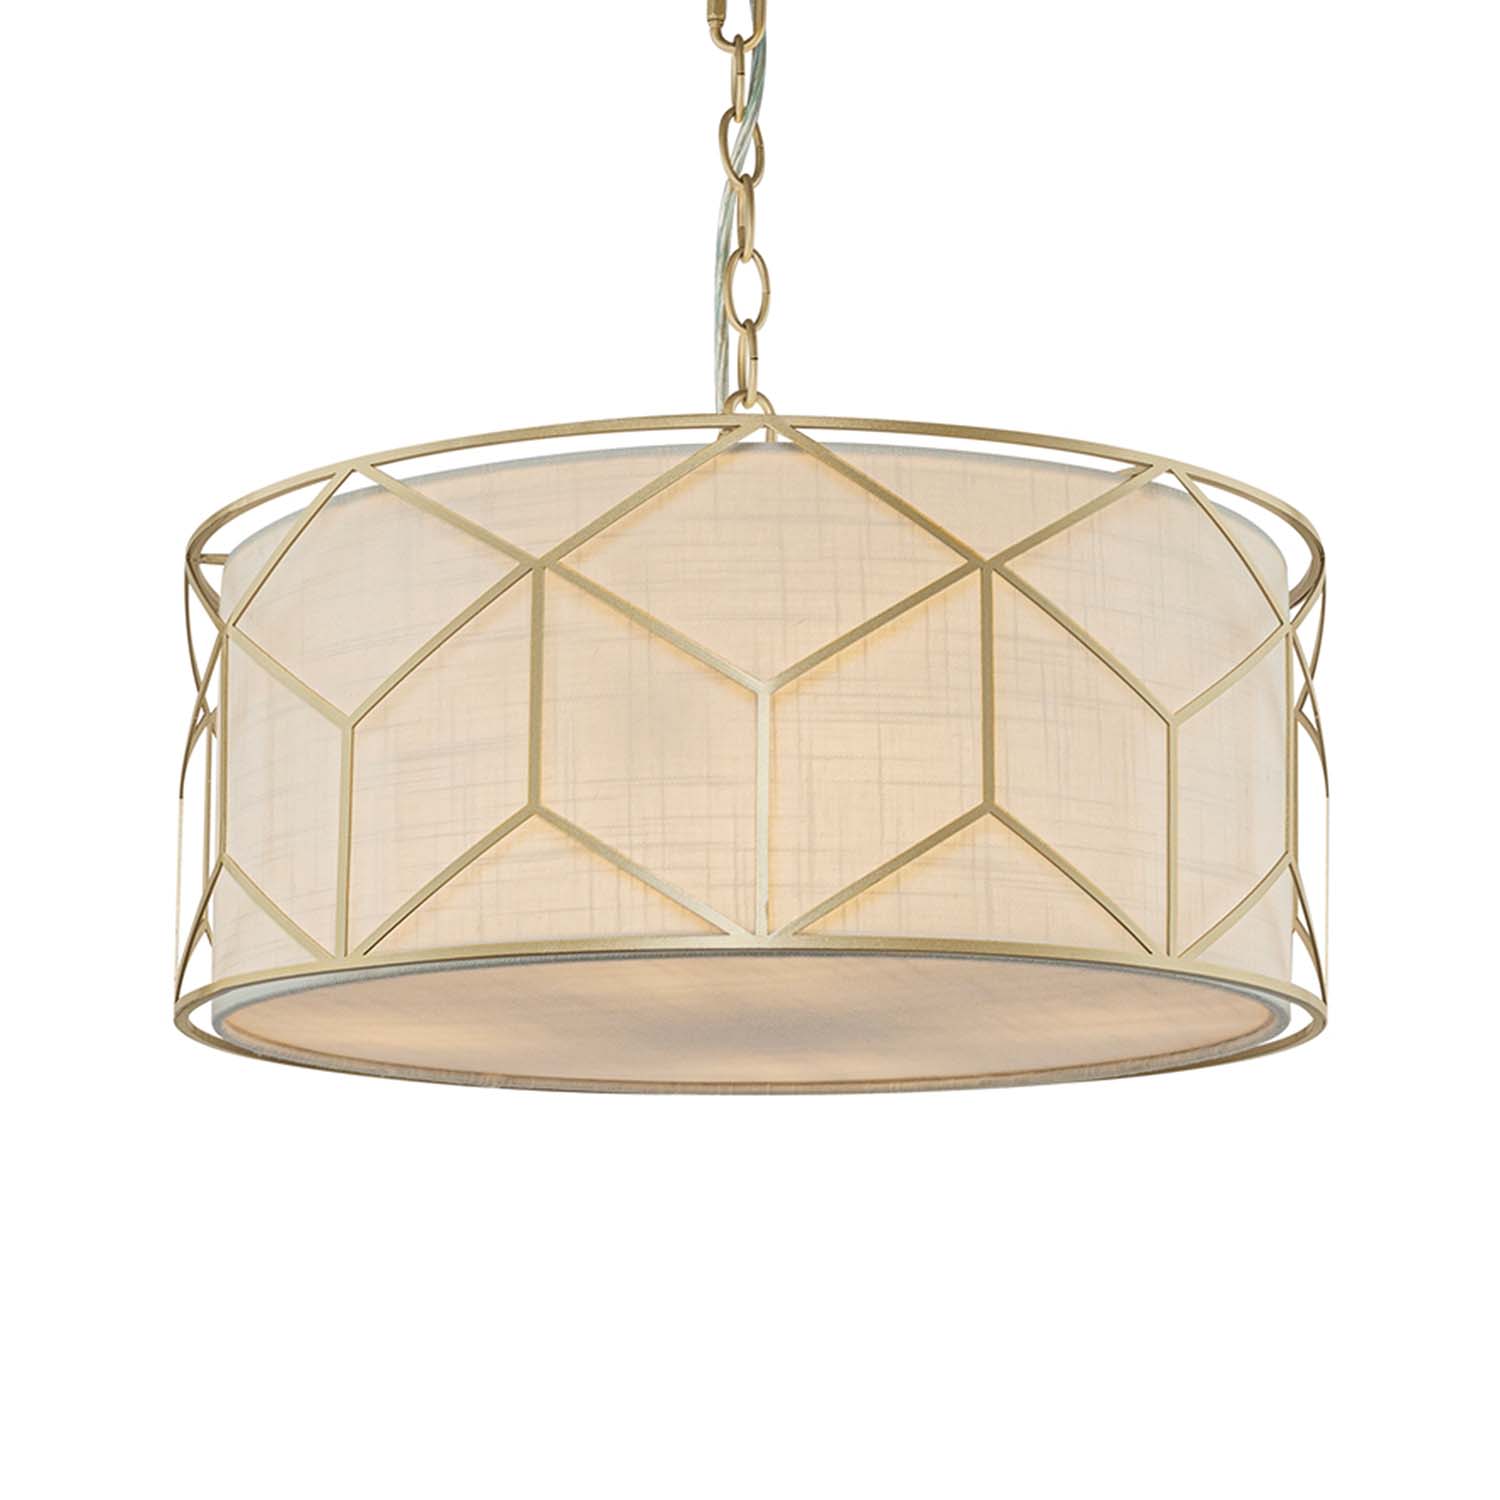 MESSINA - Art deco fabric chandelier, vintage gilded steel